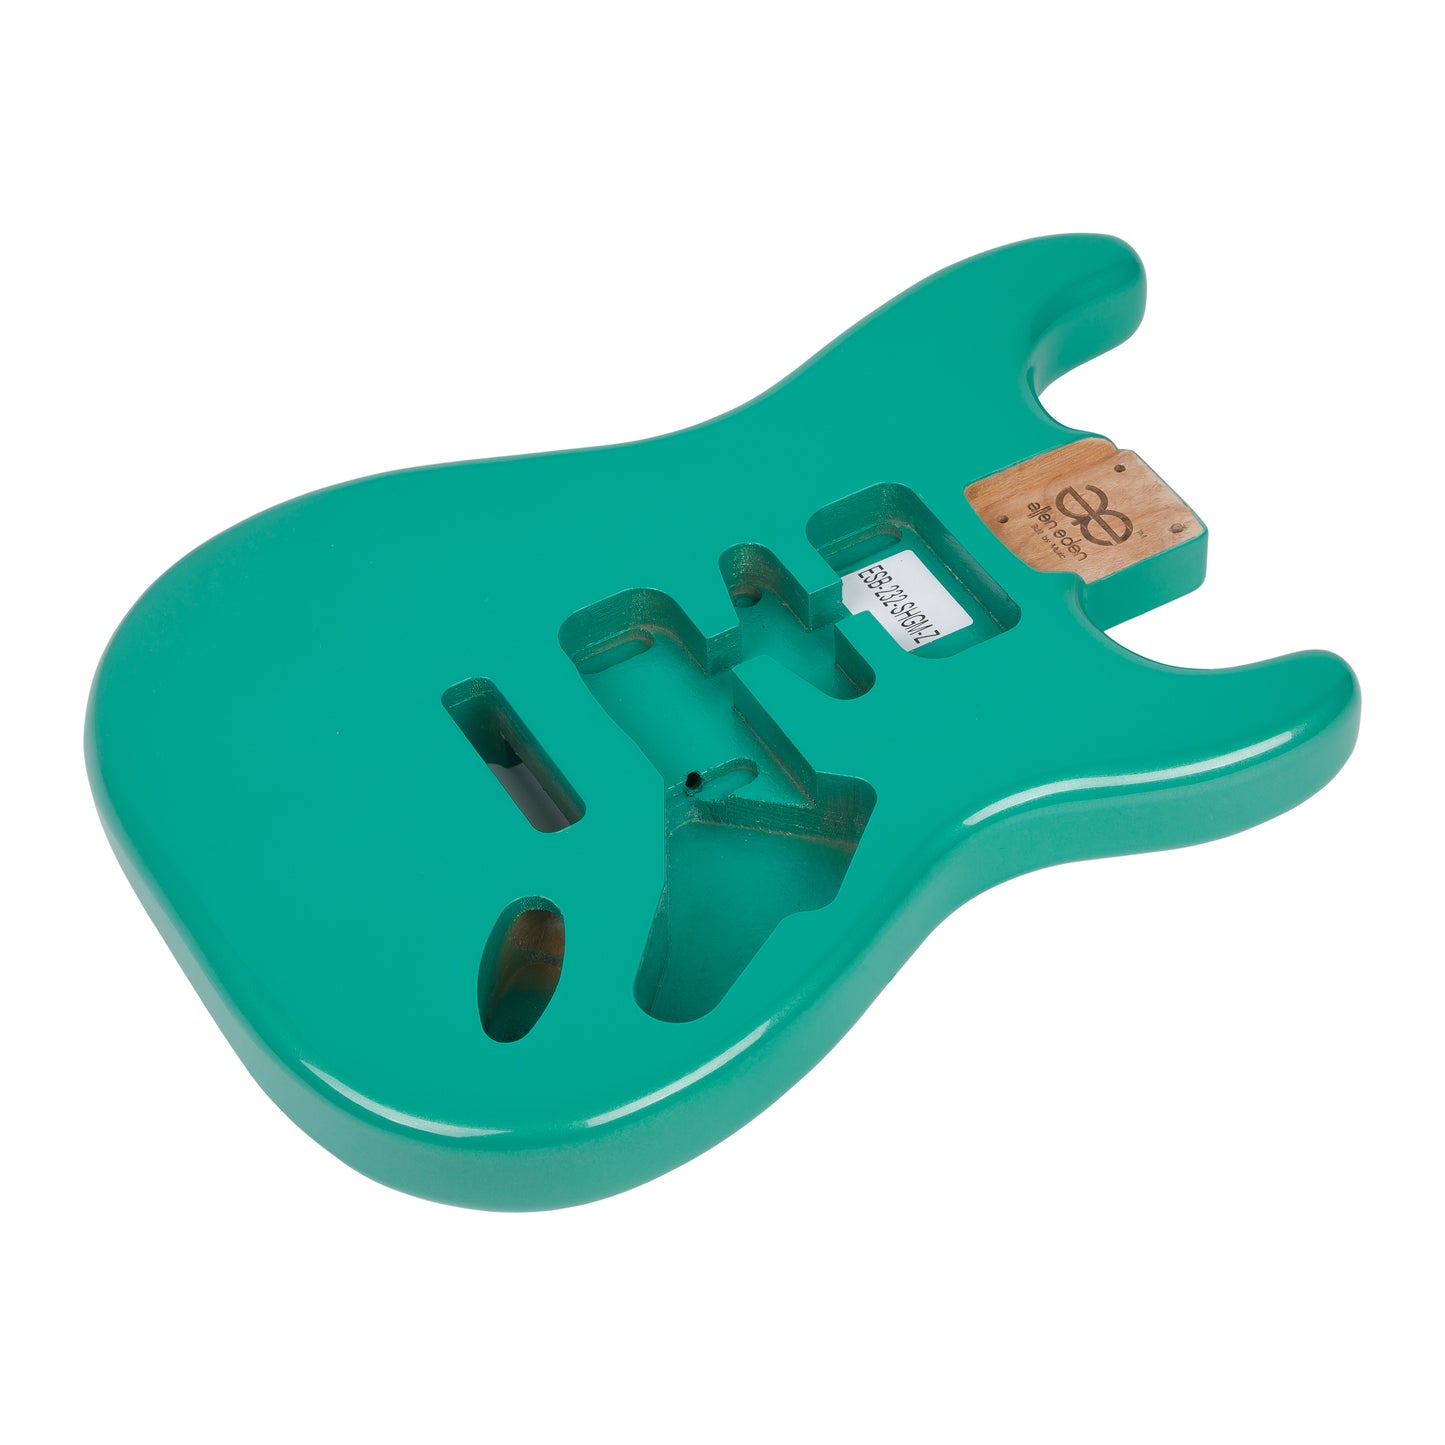 AE Guitars® S-Style Alder Replacement Guitar Body Sheerwood Green Metallic